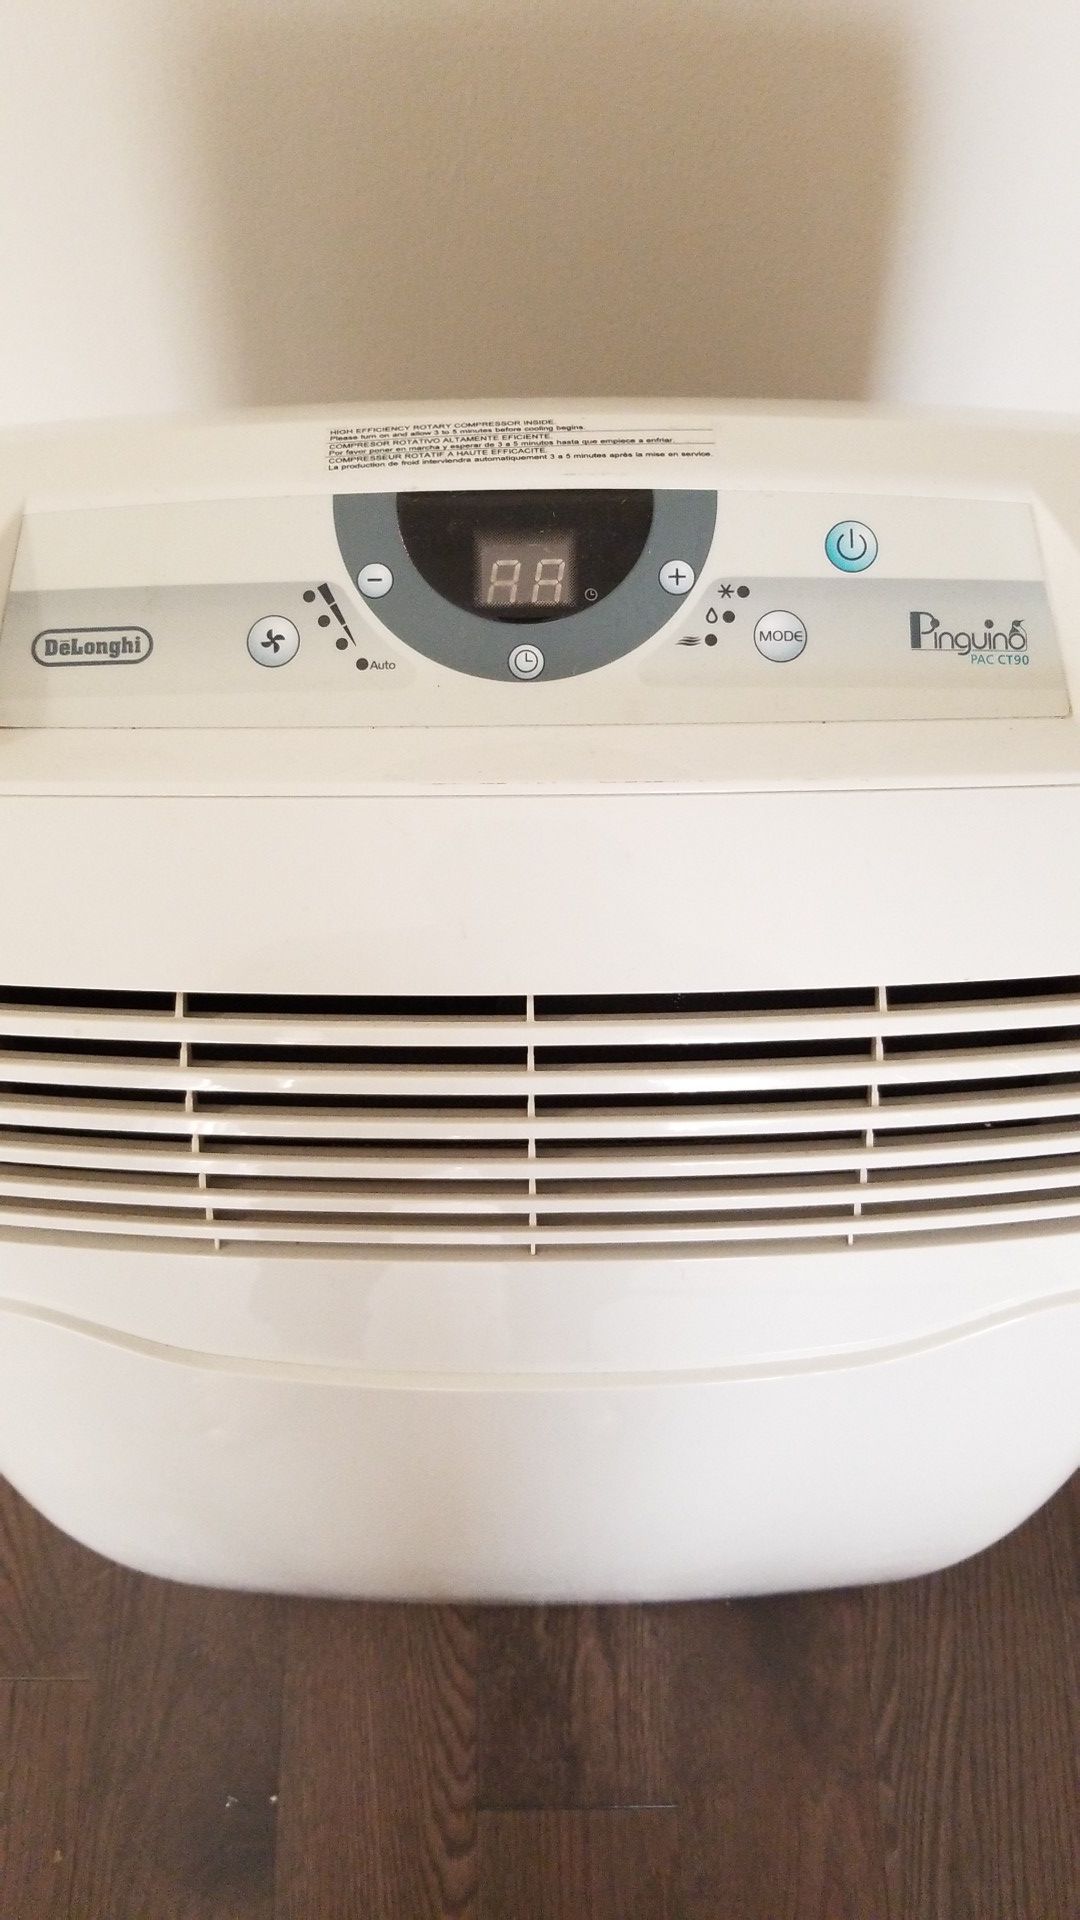 refuse Closely live Portable Air Conditioner - DeLonghi - Pinguino PAC CT90 9000 BTU for Sale  in Chicago, IL - OfferUp